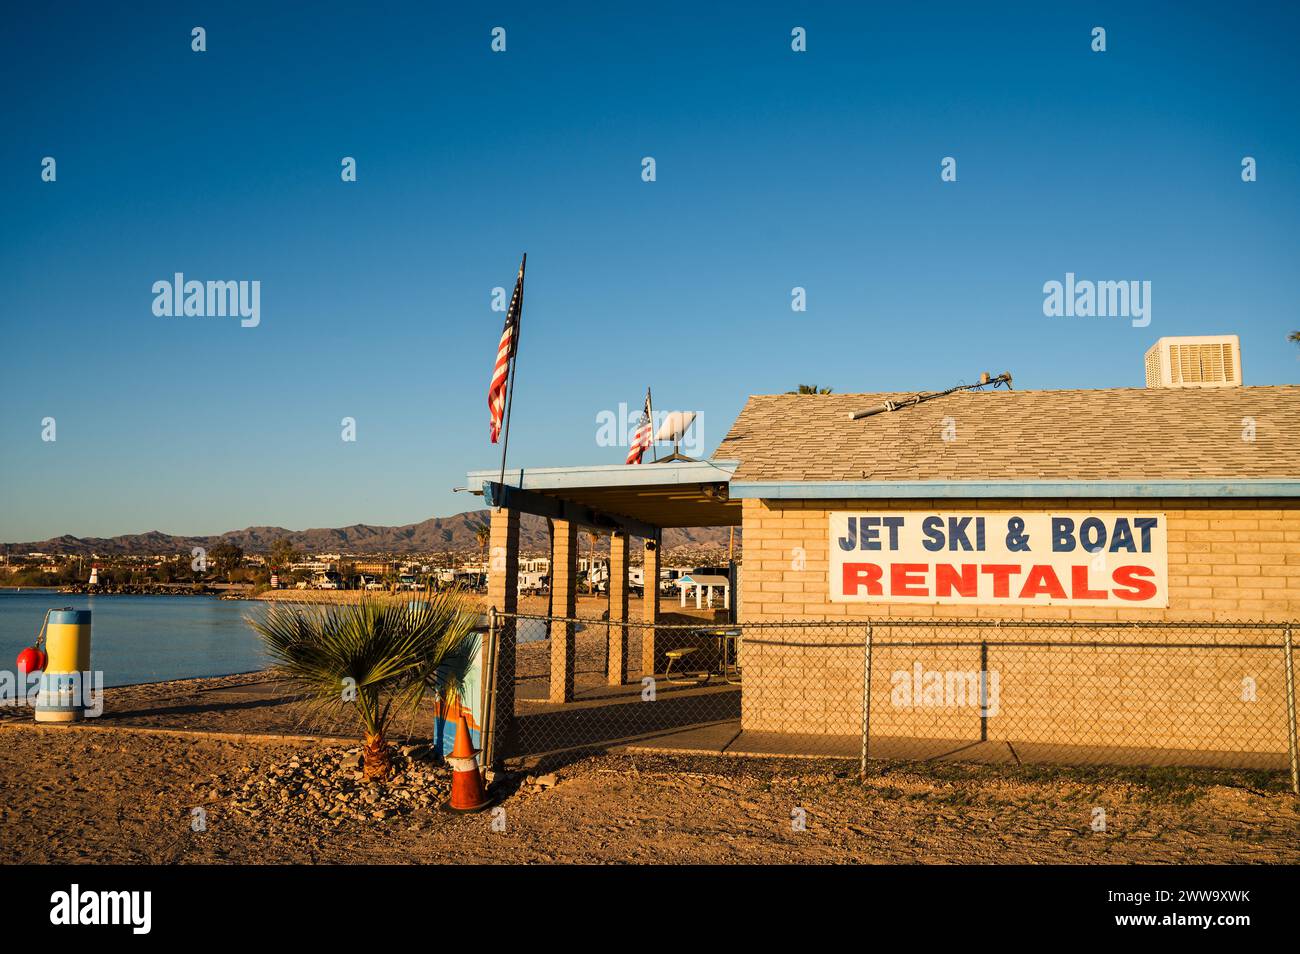 Jet ski and boat rental shop at a campground on the shore of Lake Havasu Arizona, USA. Stock Photo